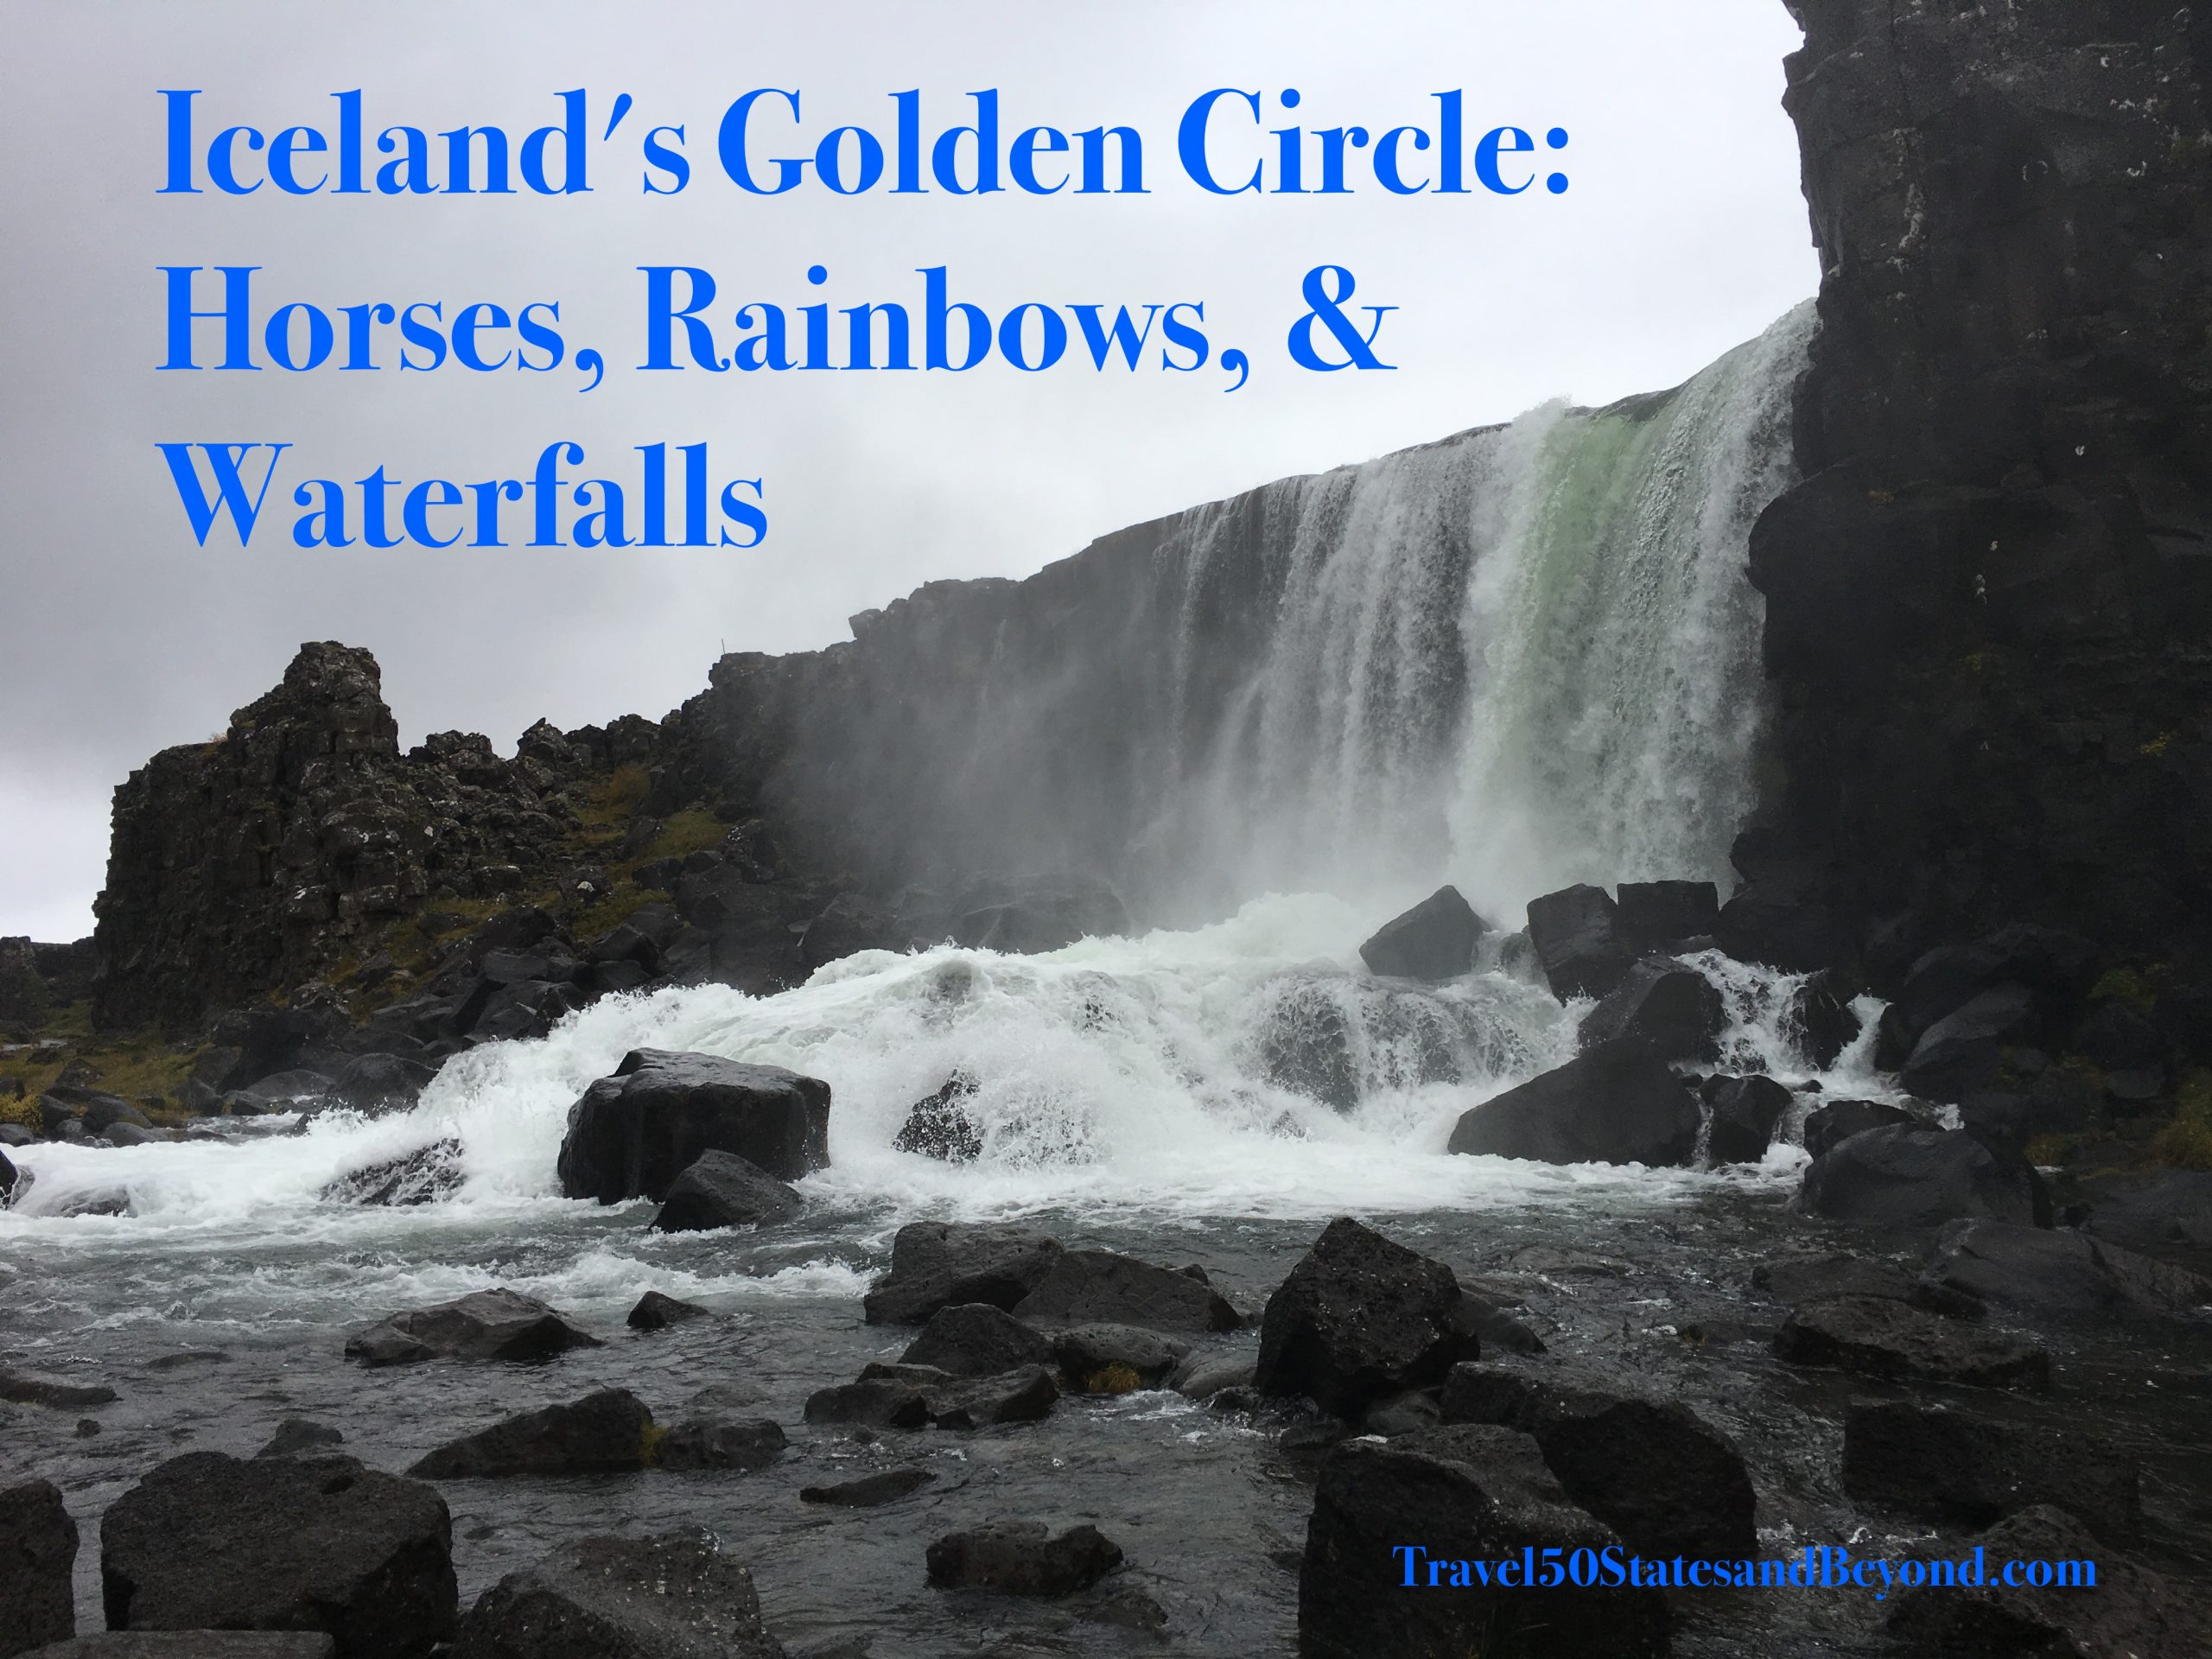 Iceland’s Golden Circle: Horses, Rainbows, & Waterfalls